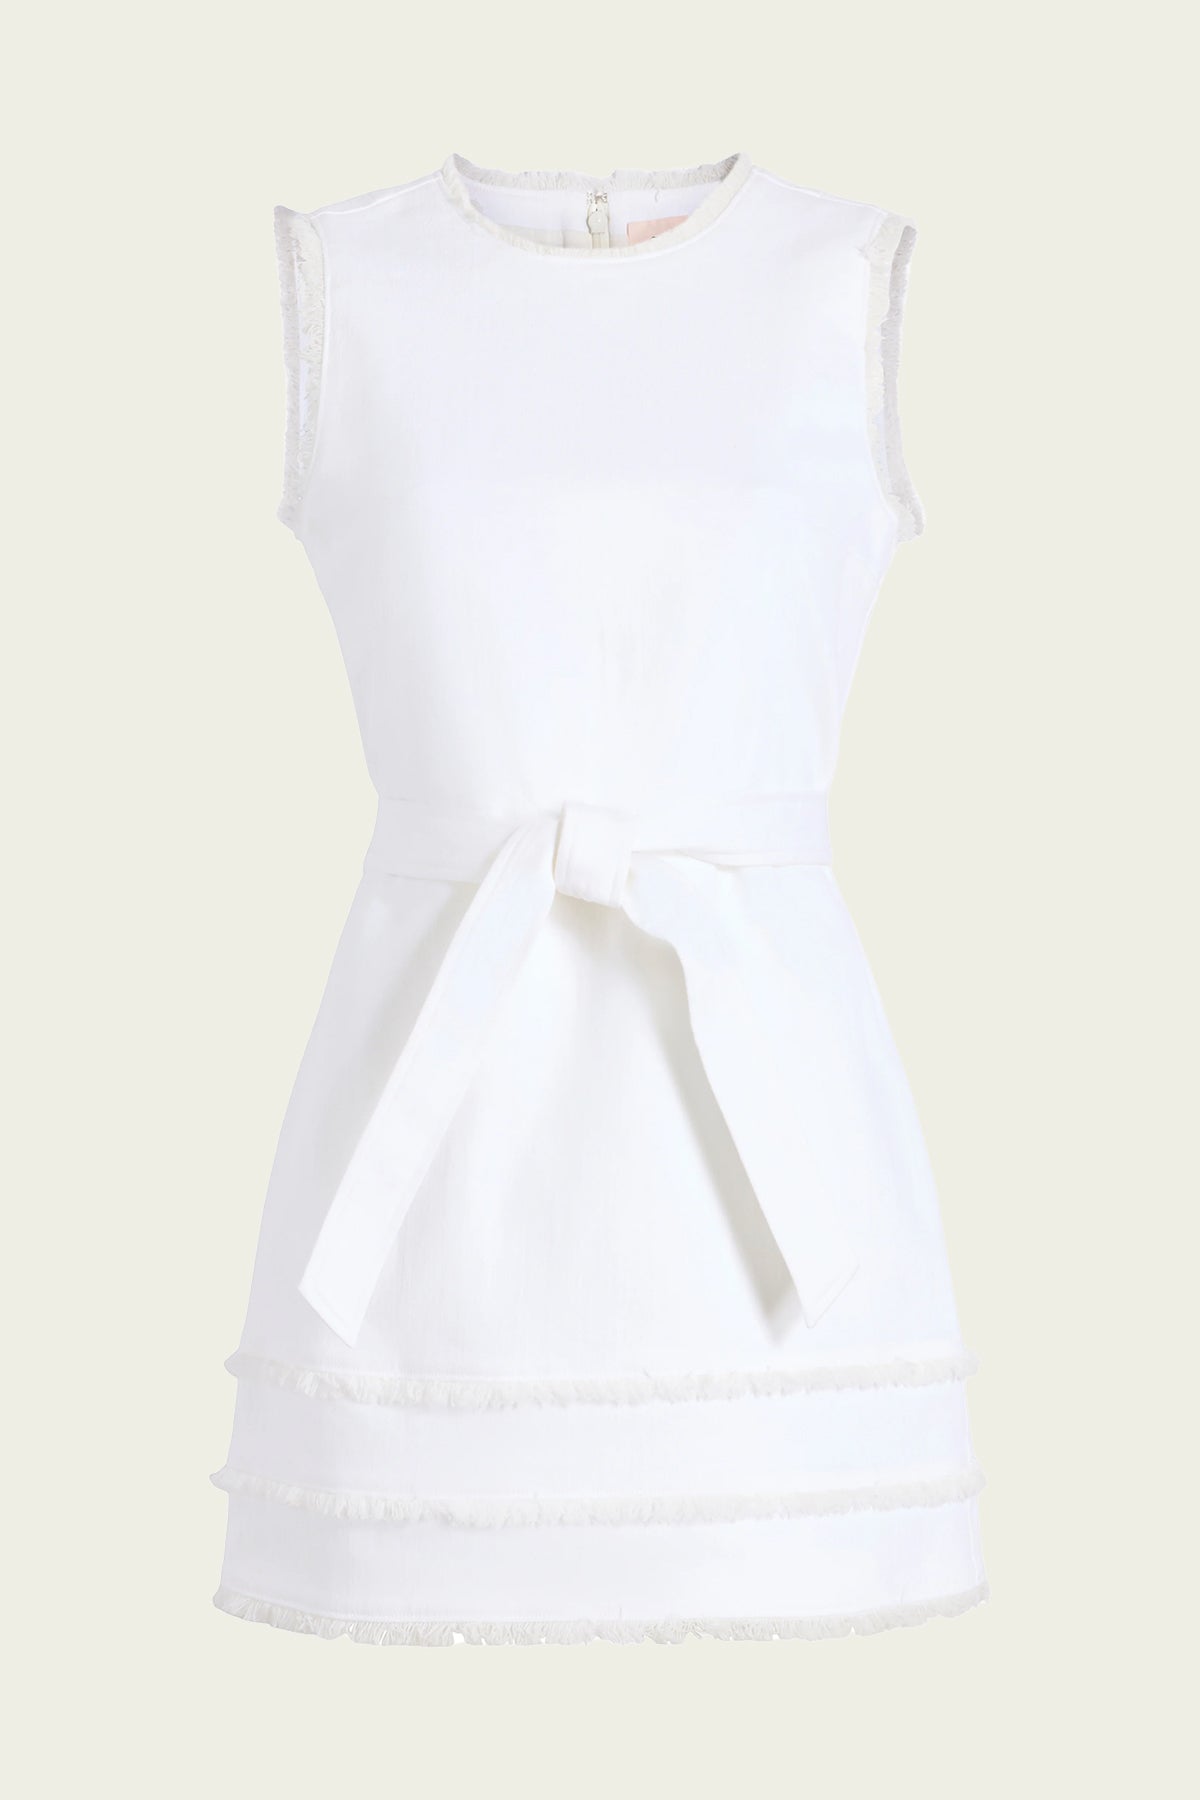 Mindie Mini Dress in White - shop-olivia.com